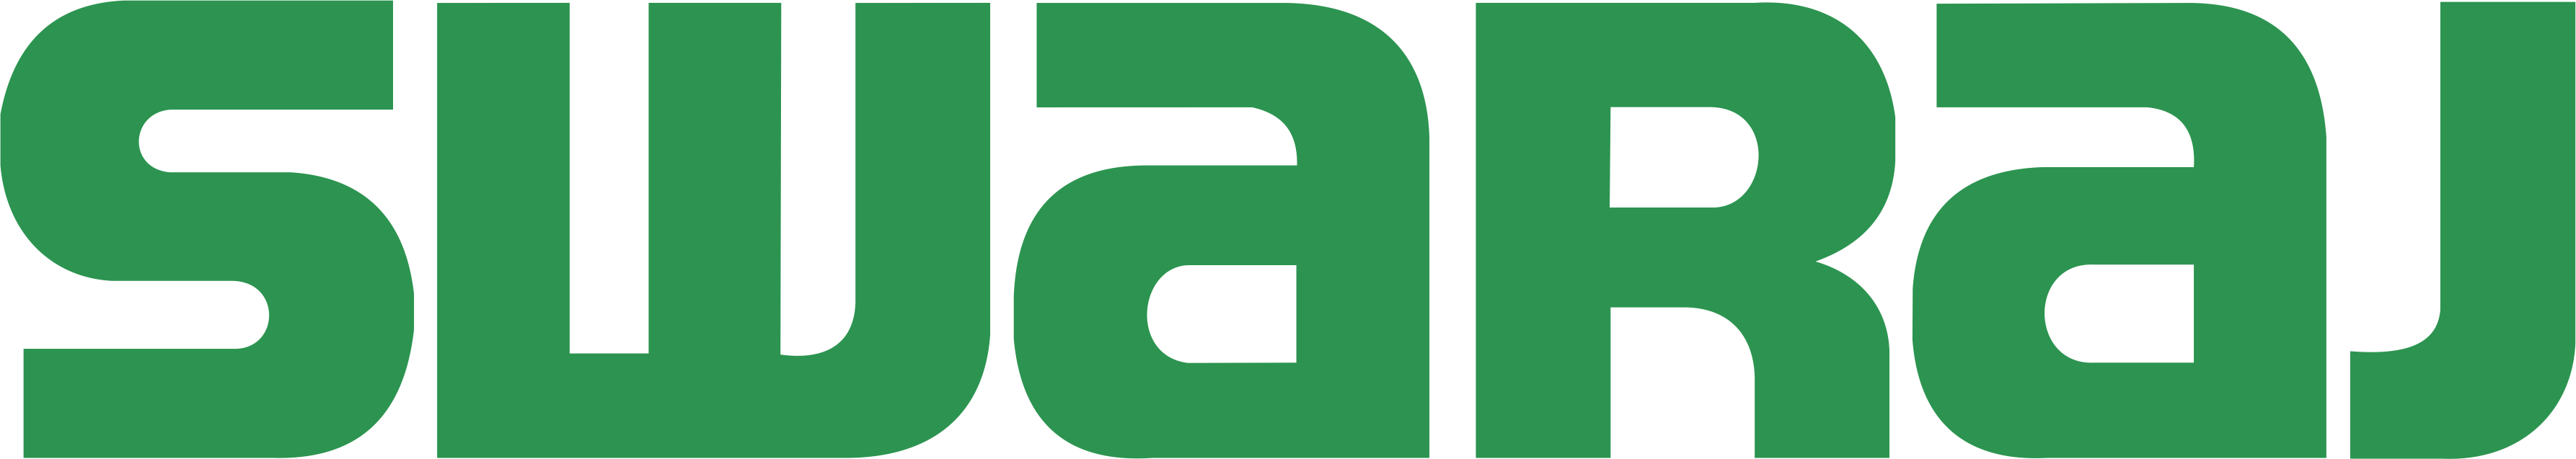 tractors brand logo